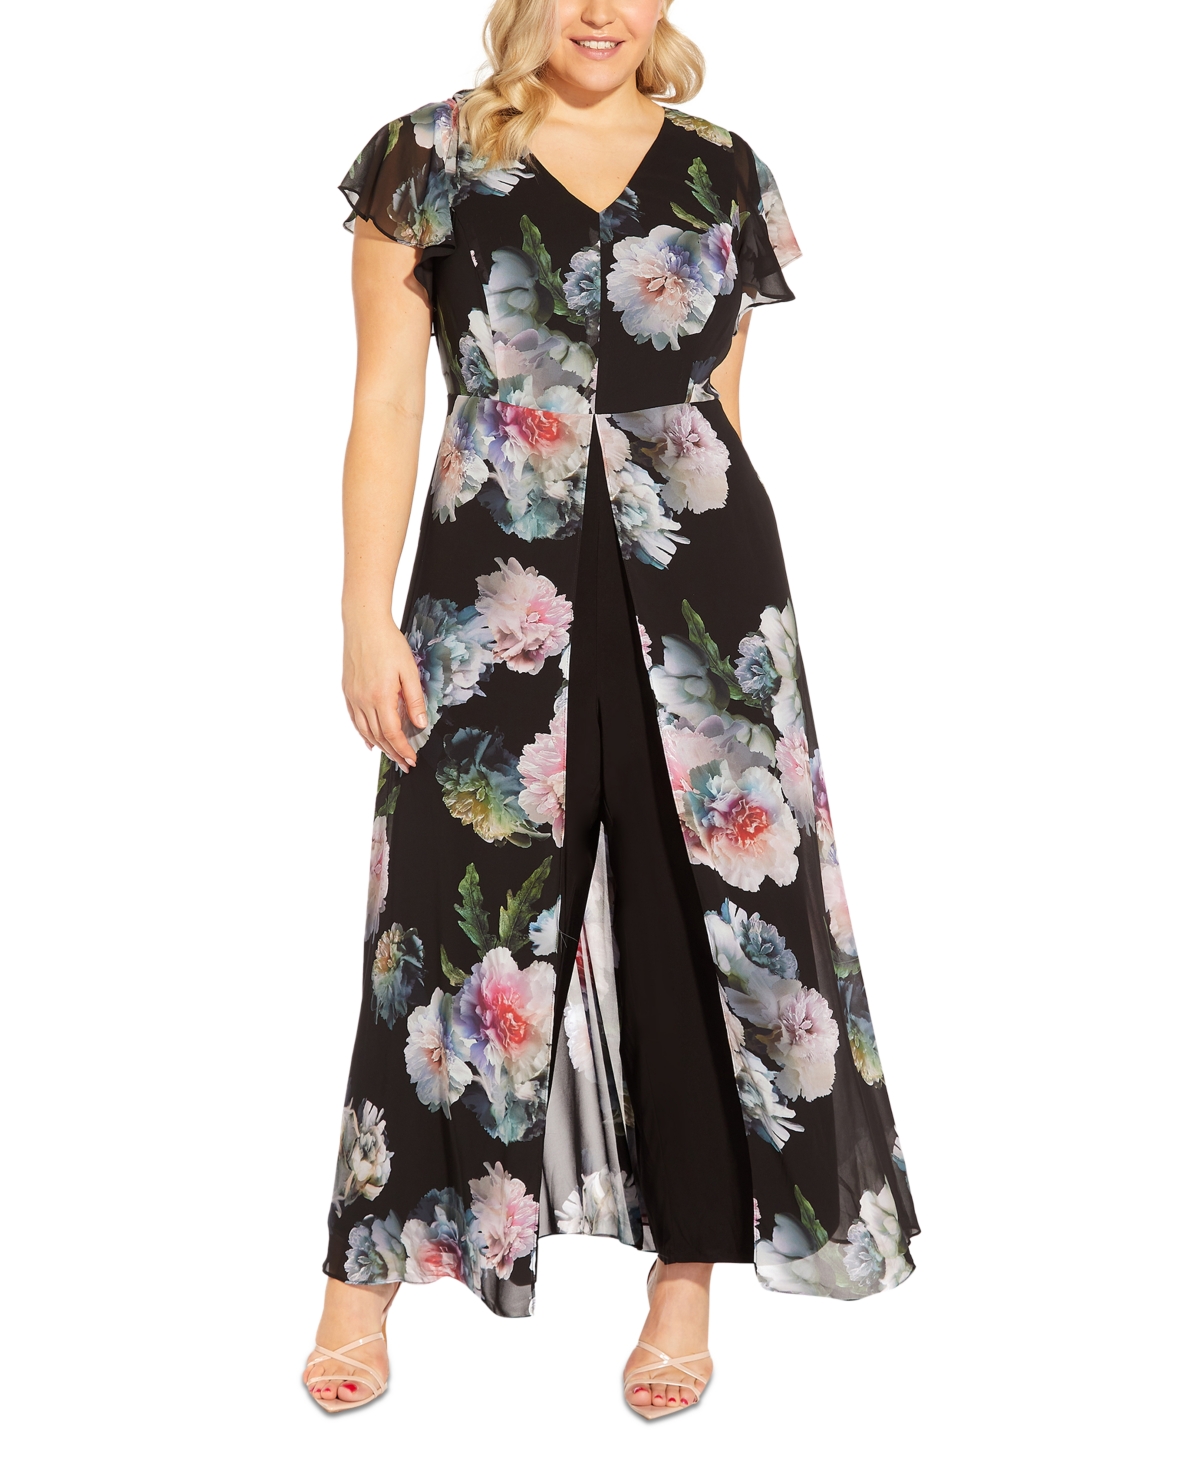 Plus Size Floral Chiffon Overlay Jumpsuit - Black Multi